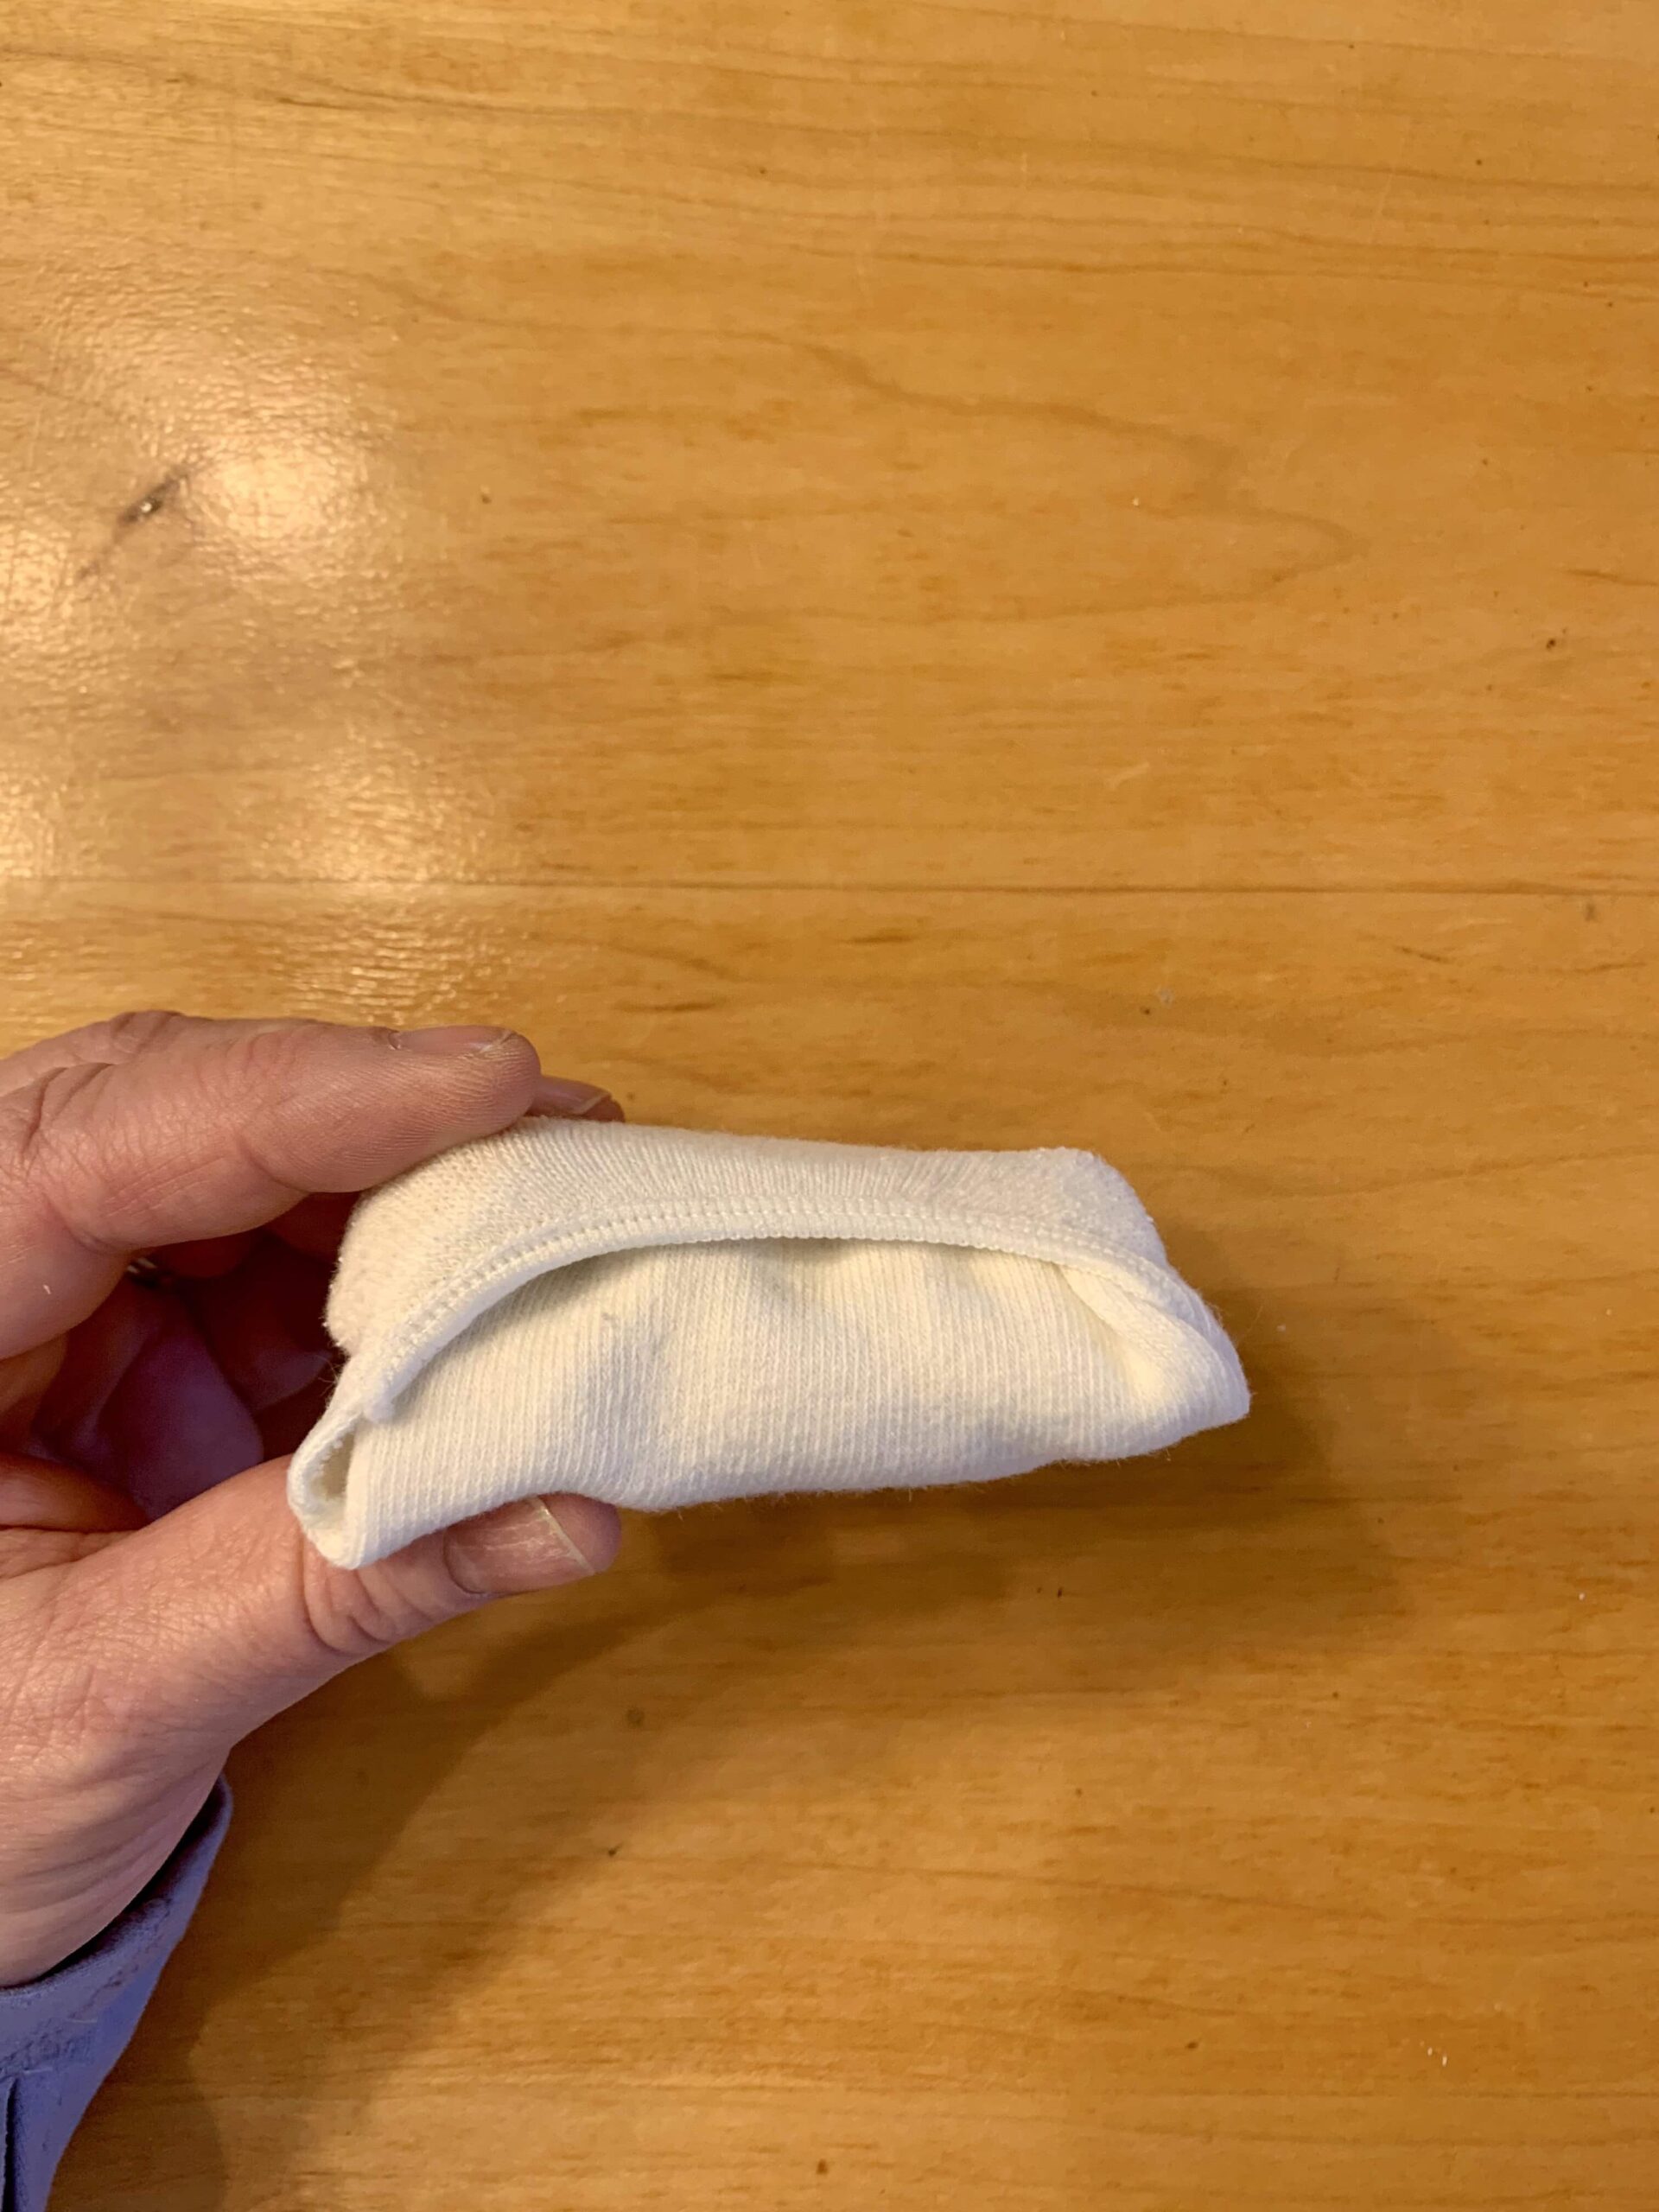 How to fold no show socks